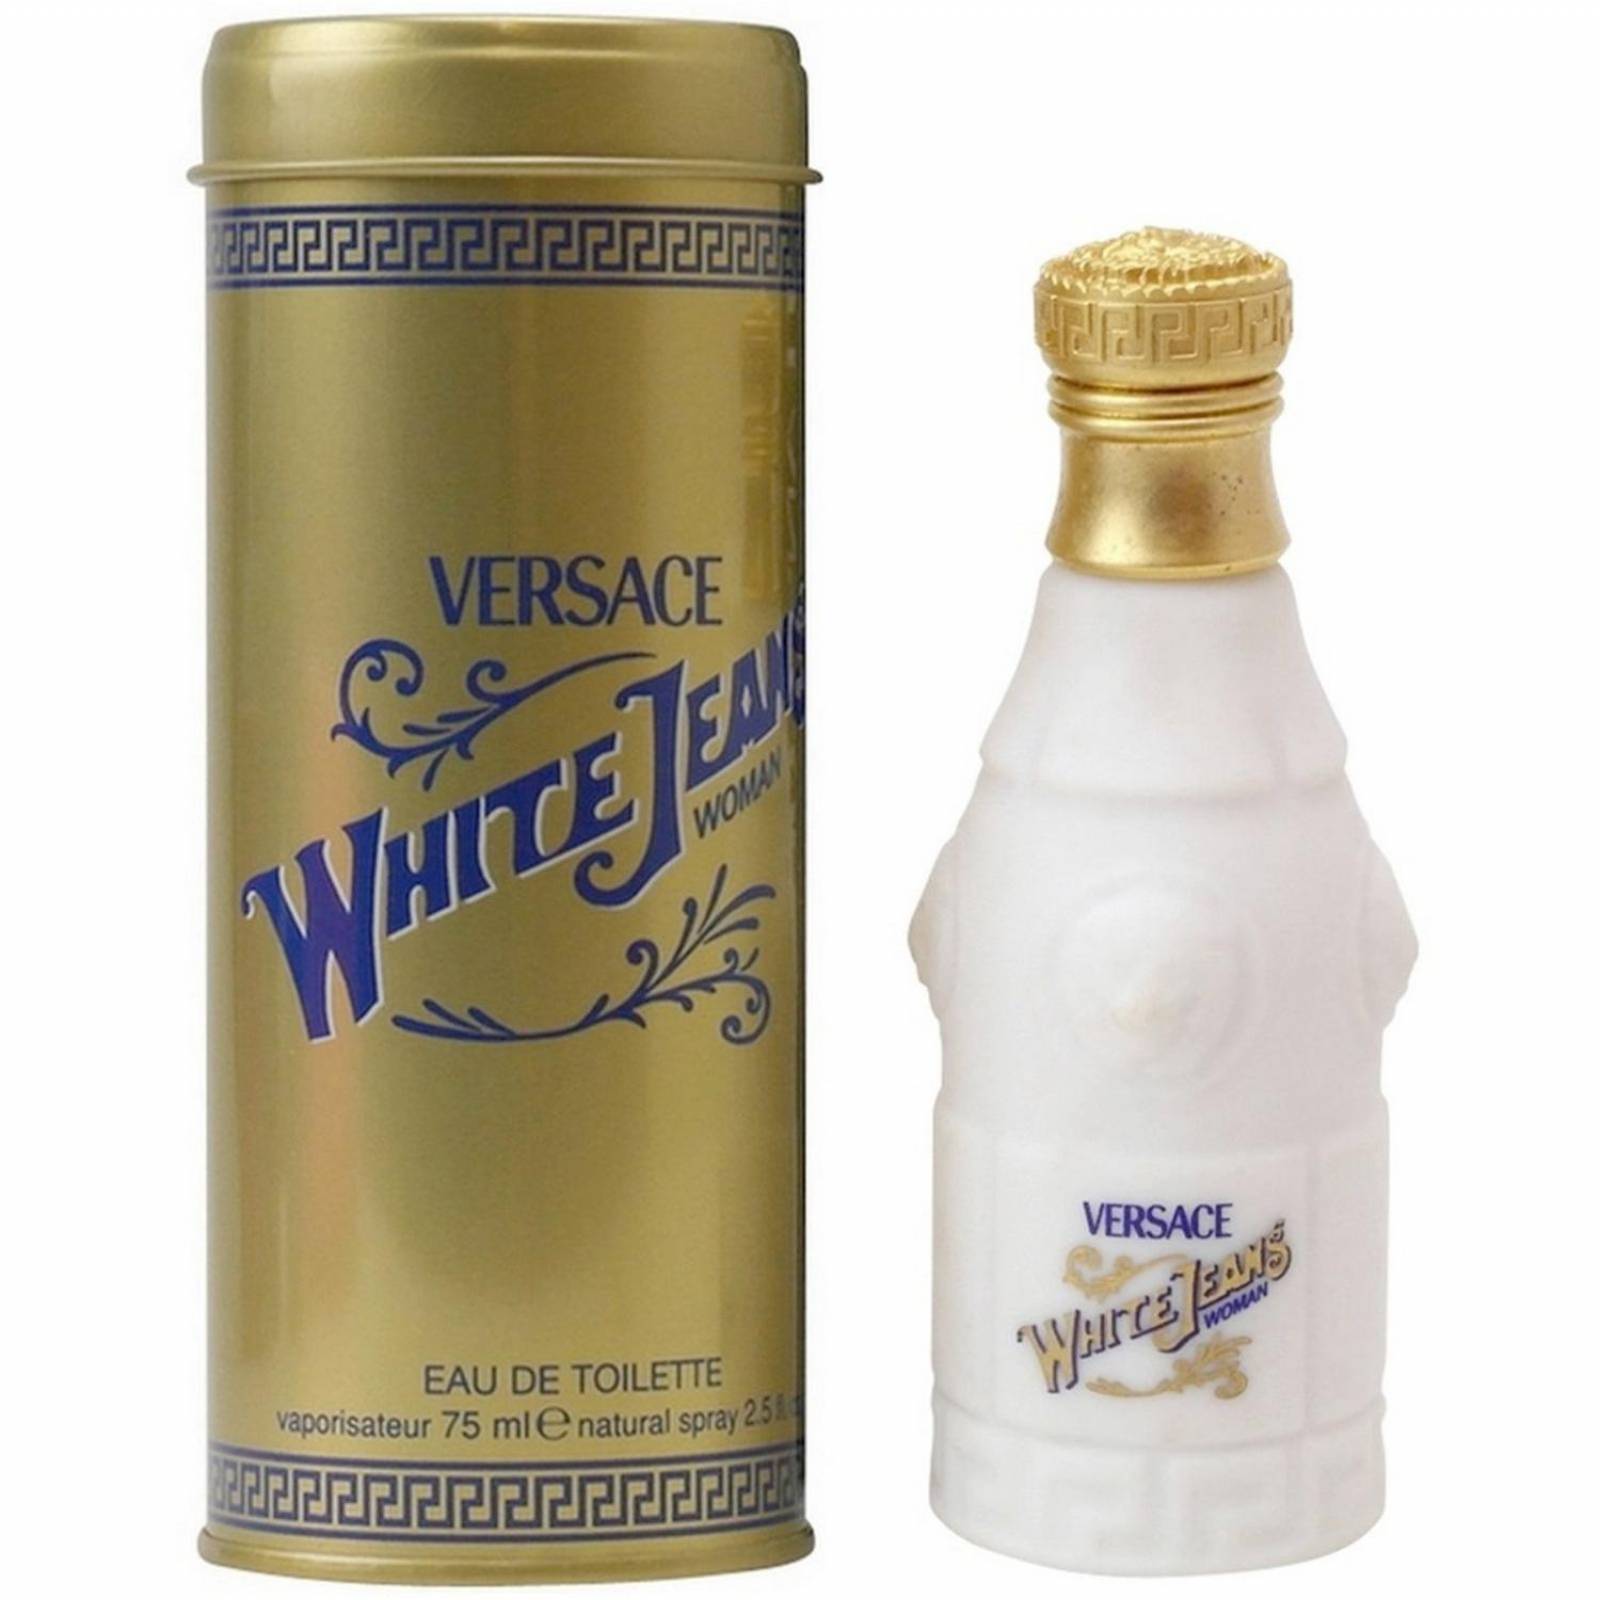 Perfume White Jeans de Versace EDT 75 ml